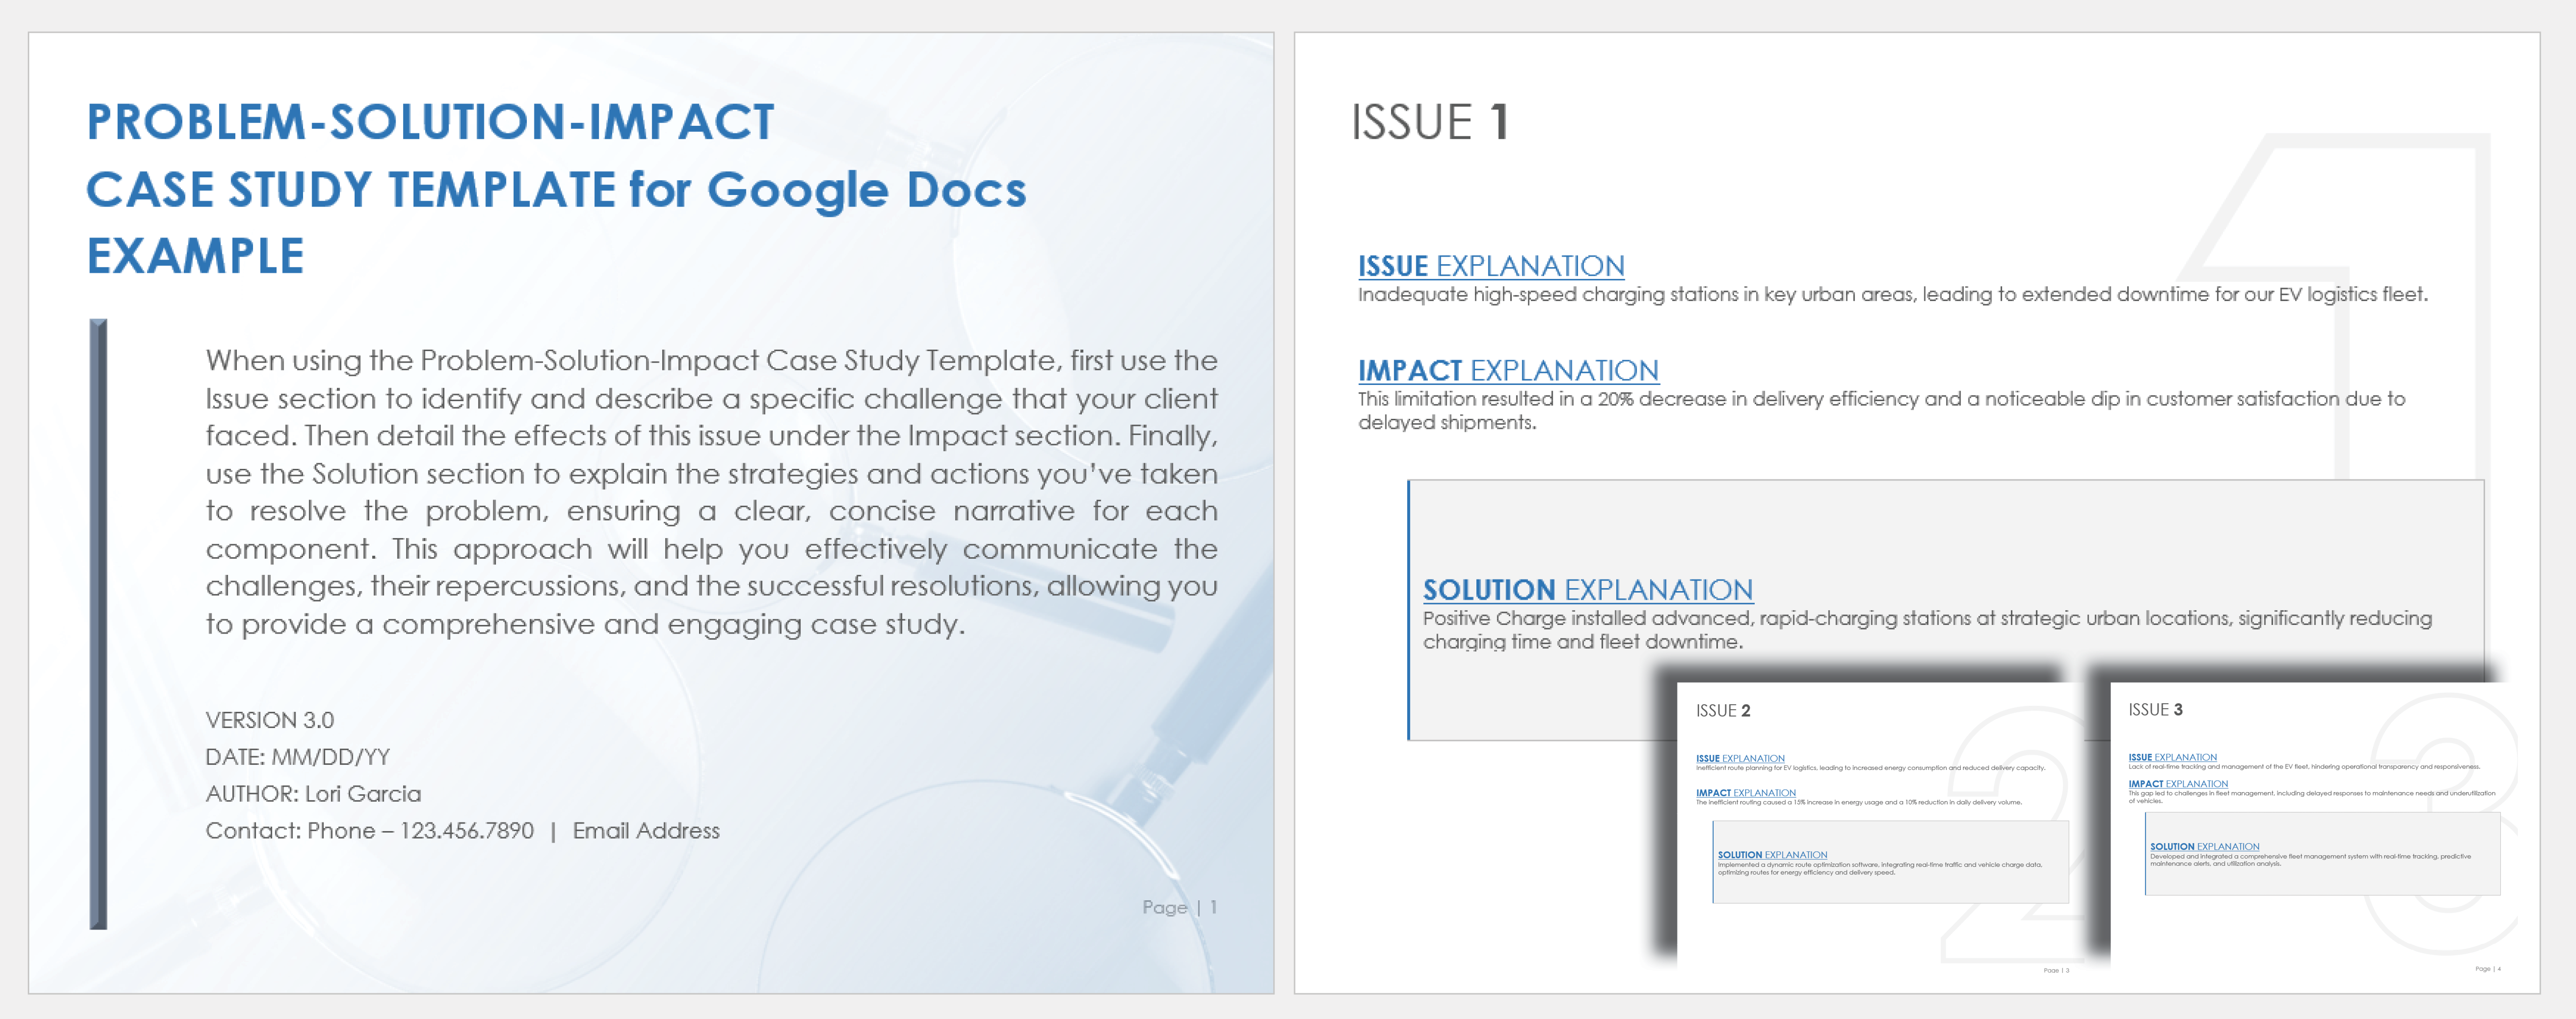 Problem-Solution-Impact Case Study Example Template Google Docs